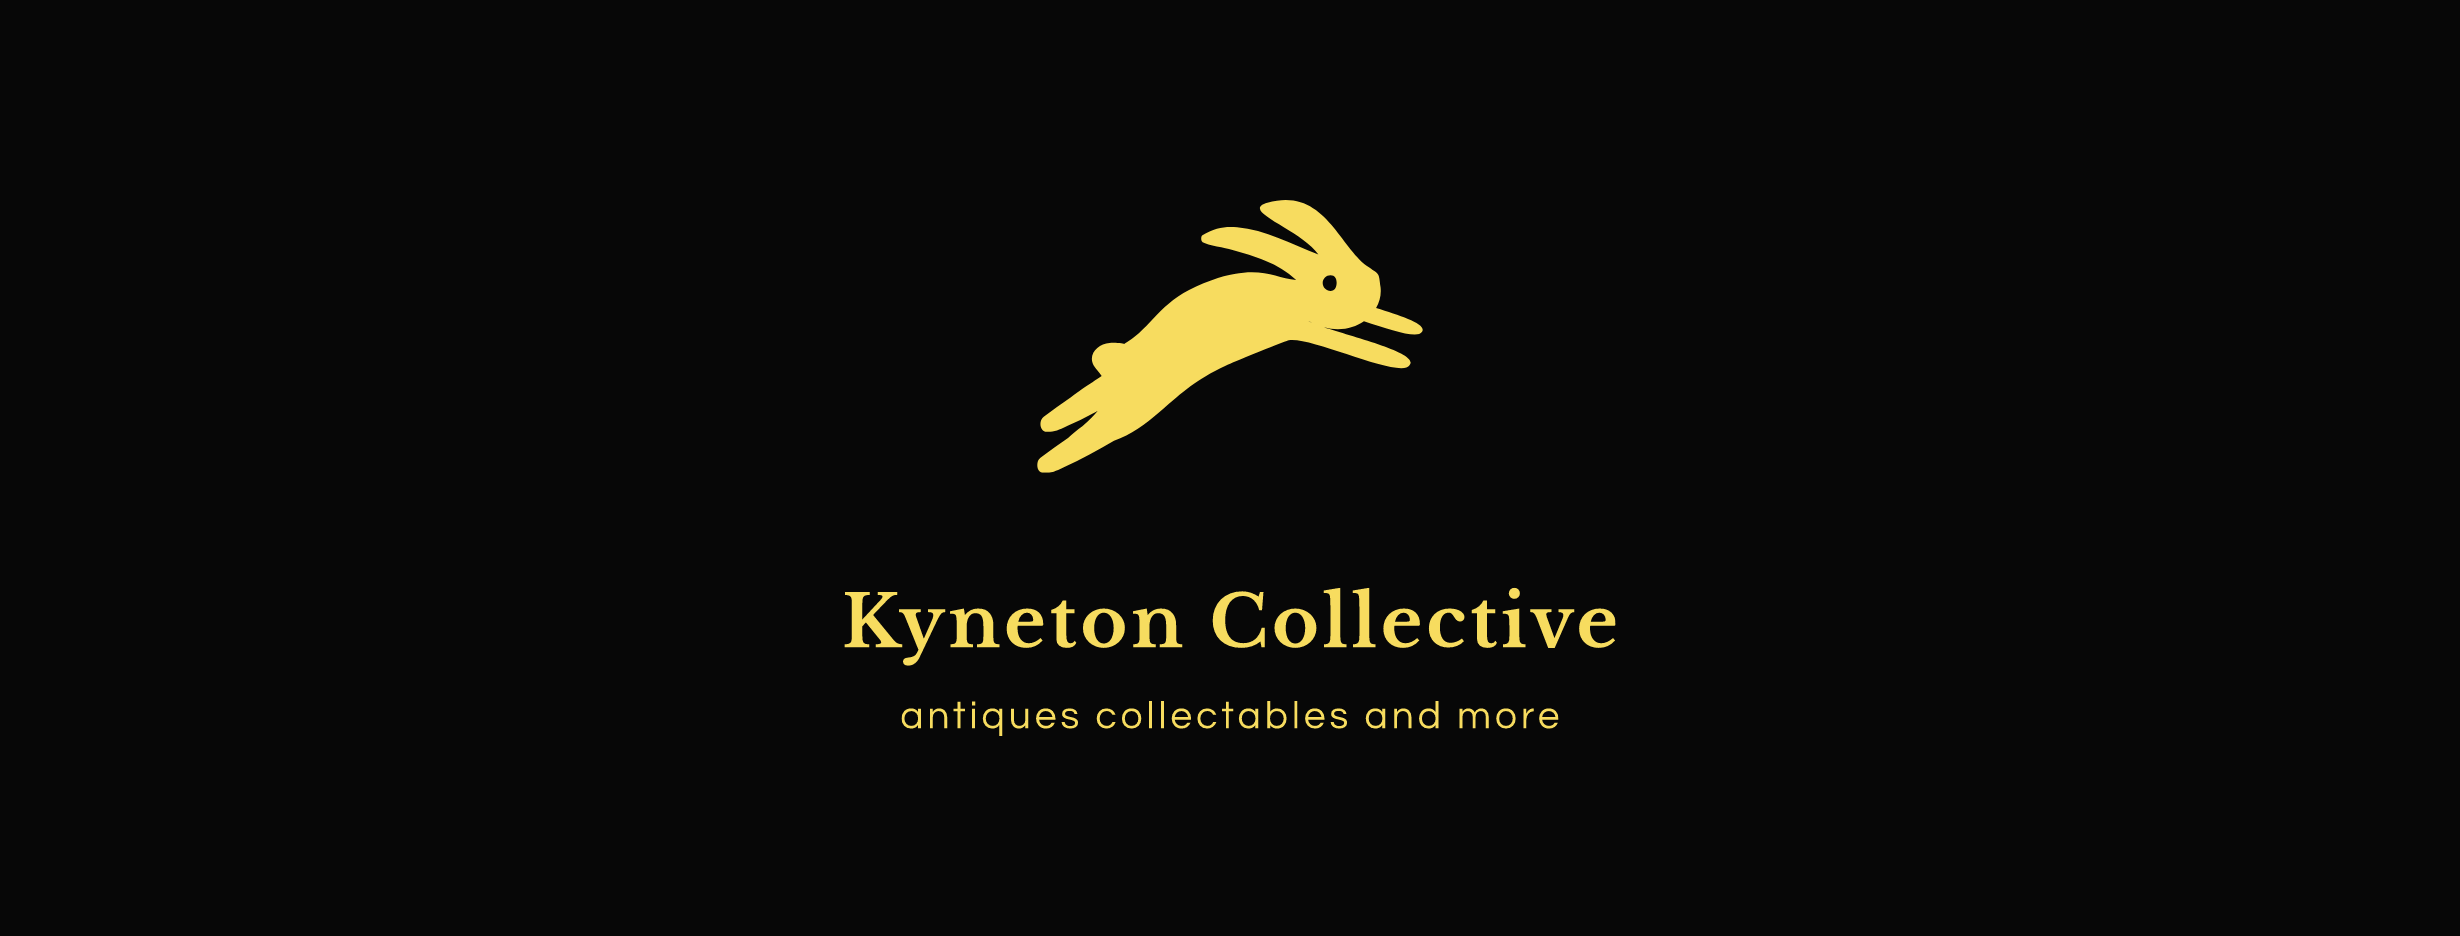 Kyneton Collective